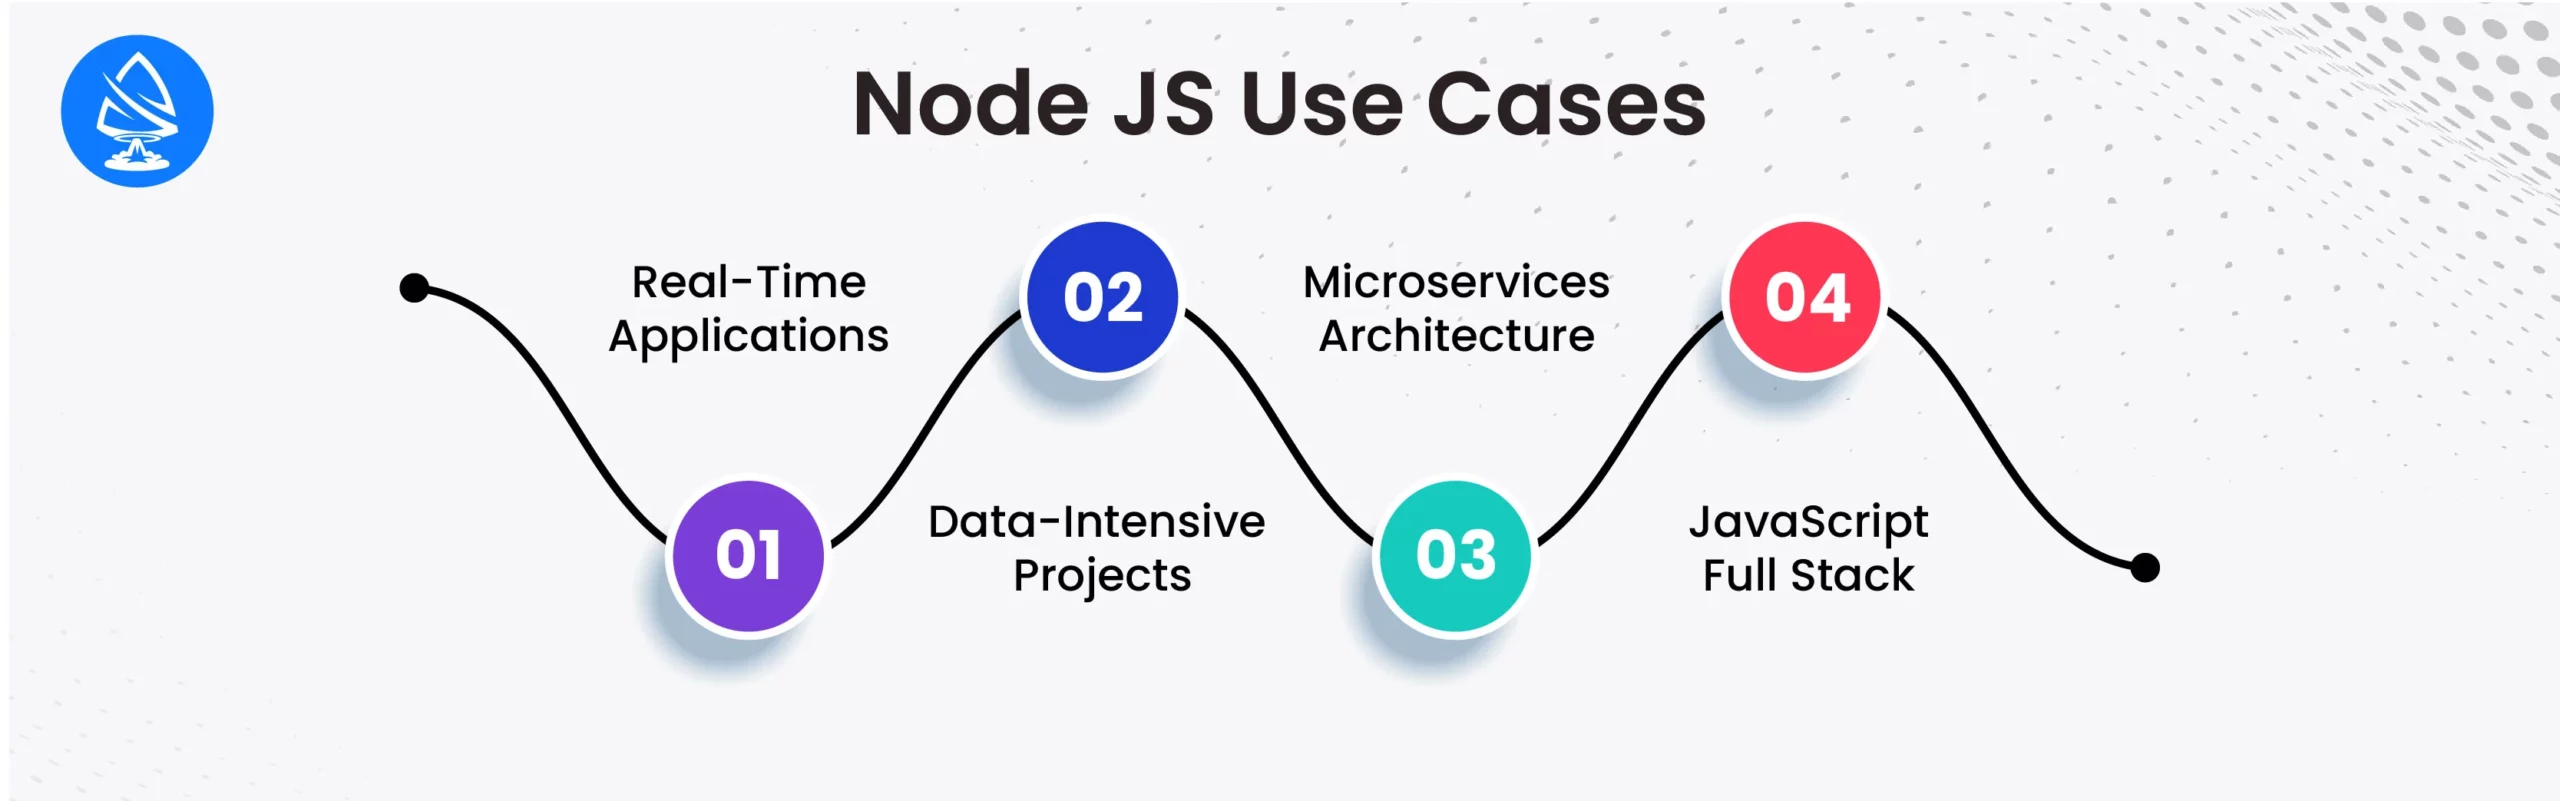 Node JS Use Cases 